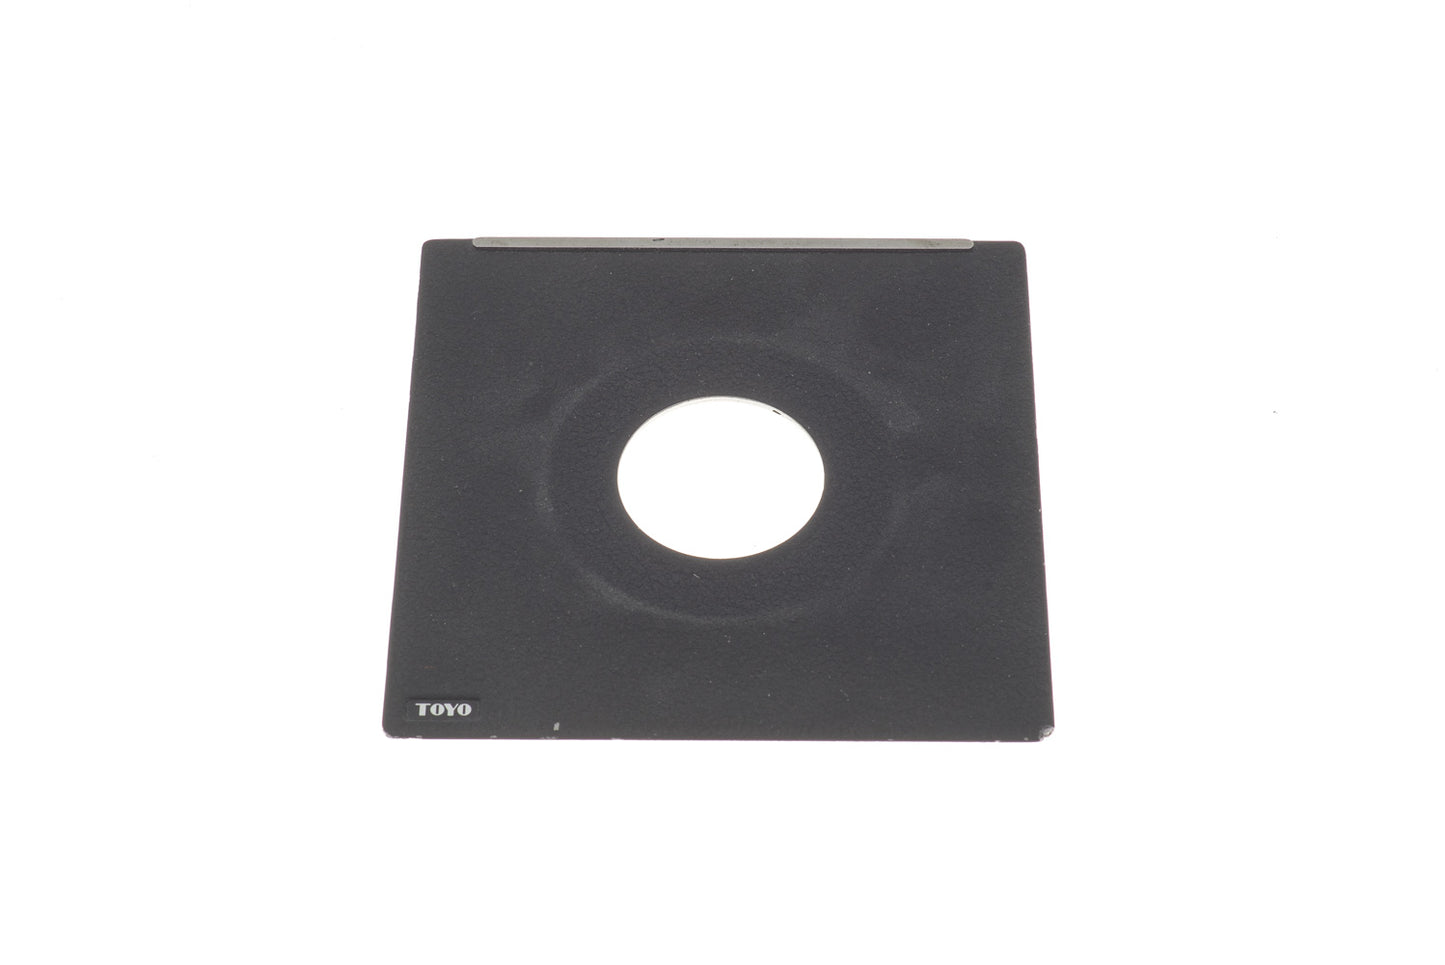 Toyo Lens Board 110mm x 110mm Copal #0 - Accessory